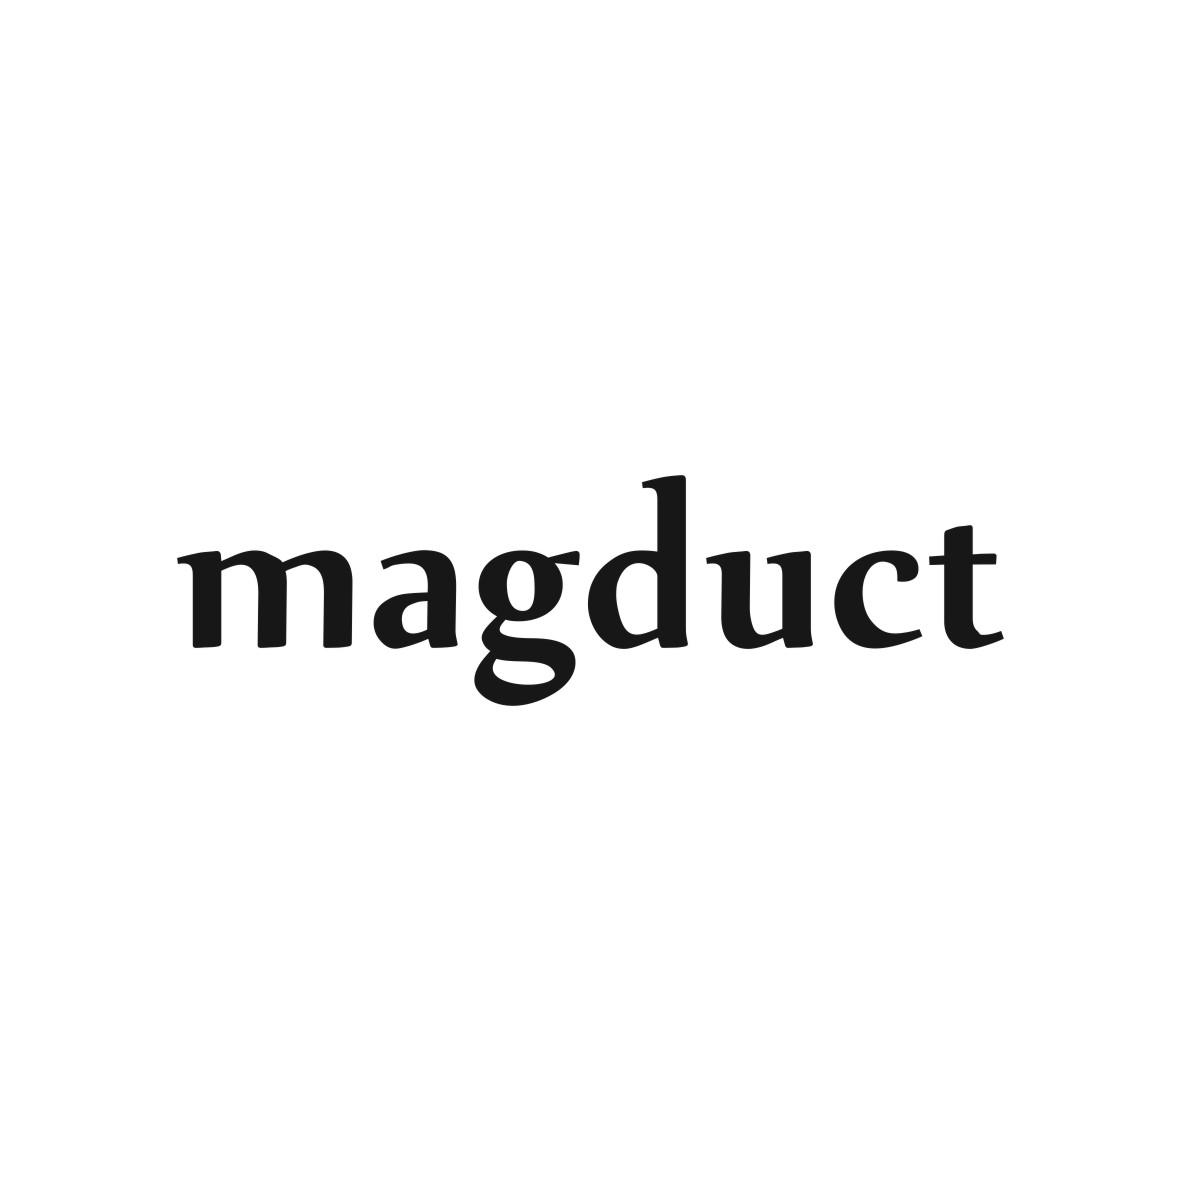 MAGDUCT商标图片